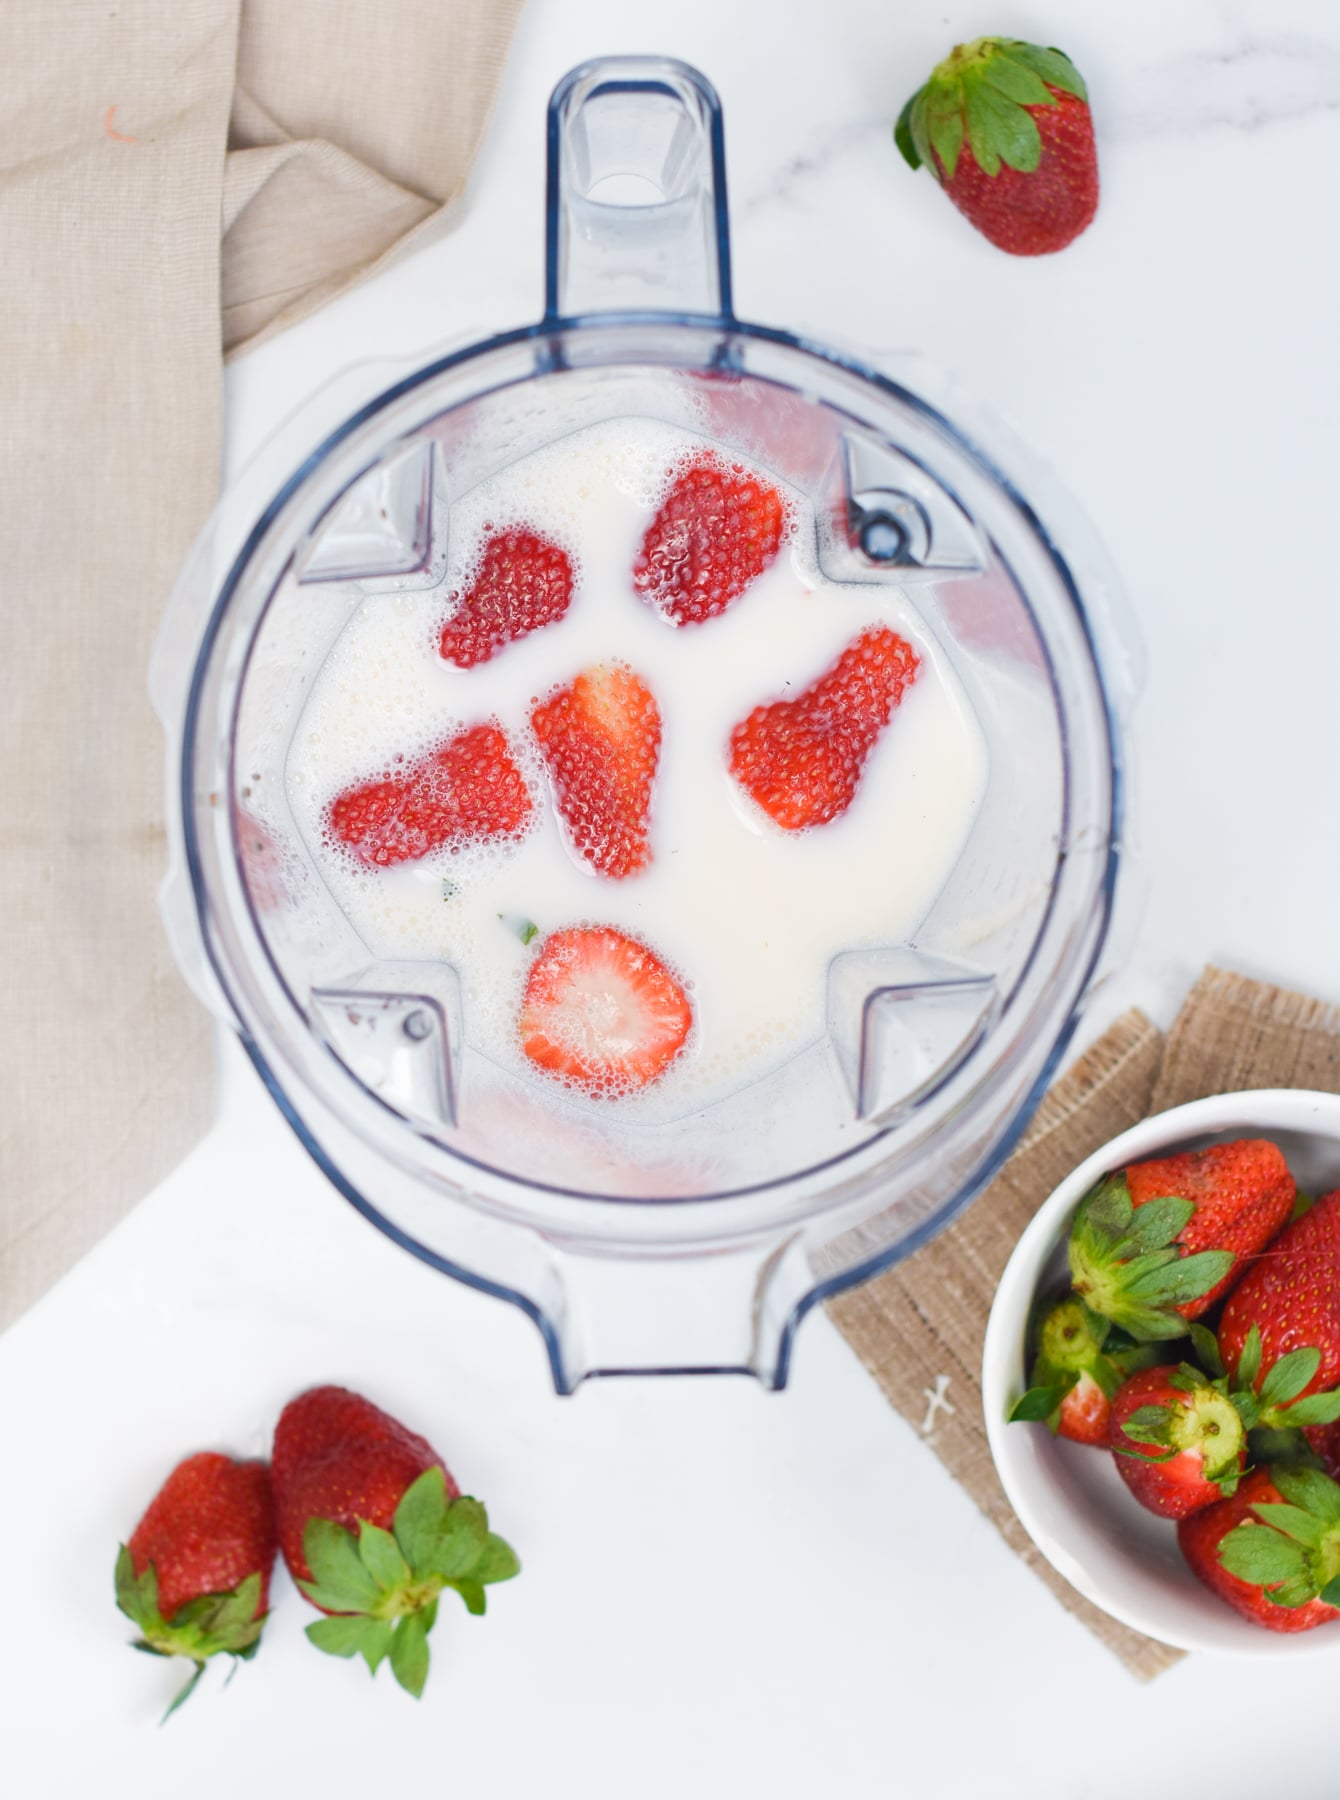 Strawberry Milk in a blender